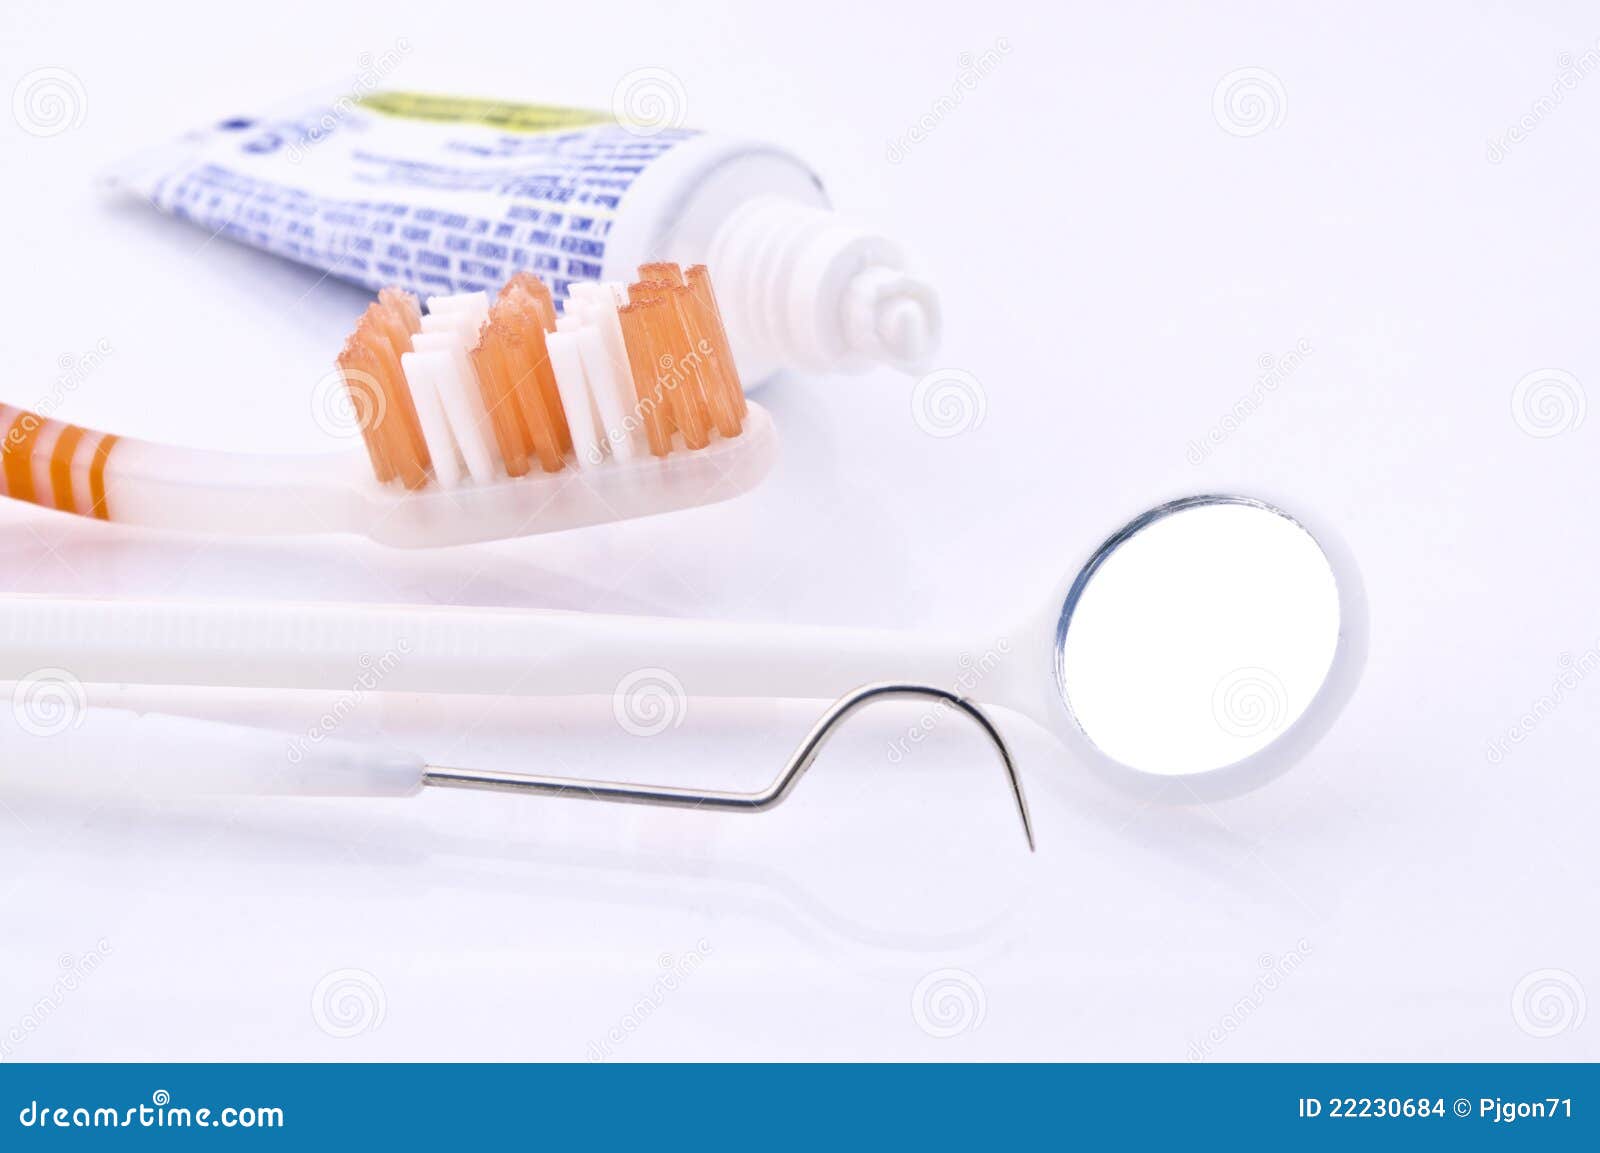 dental-care-22230684.jpg